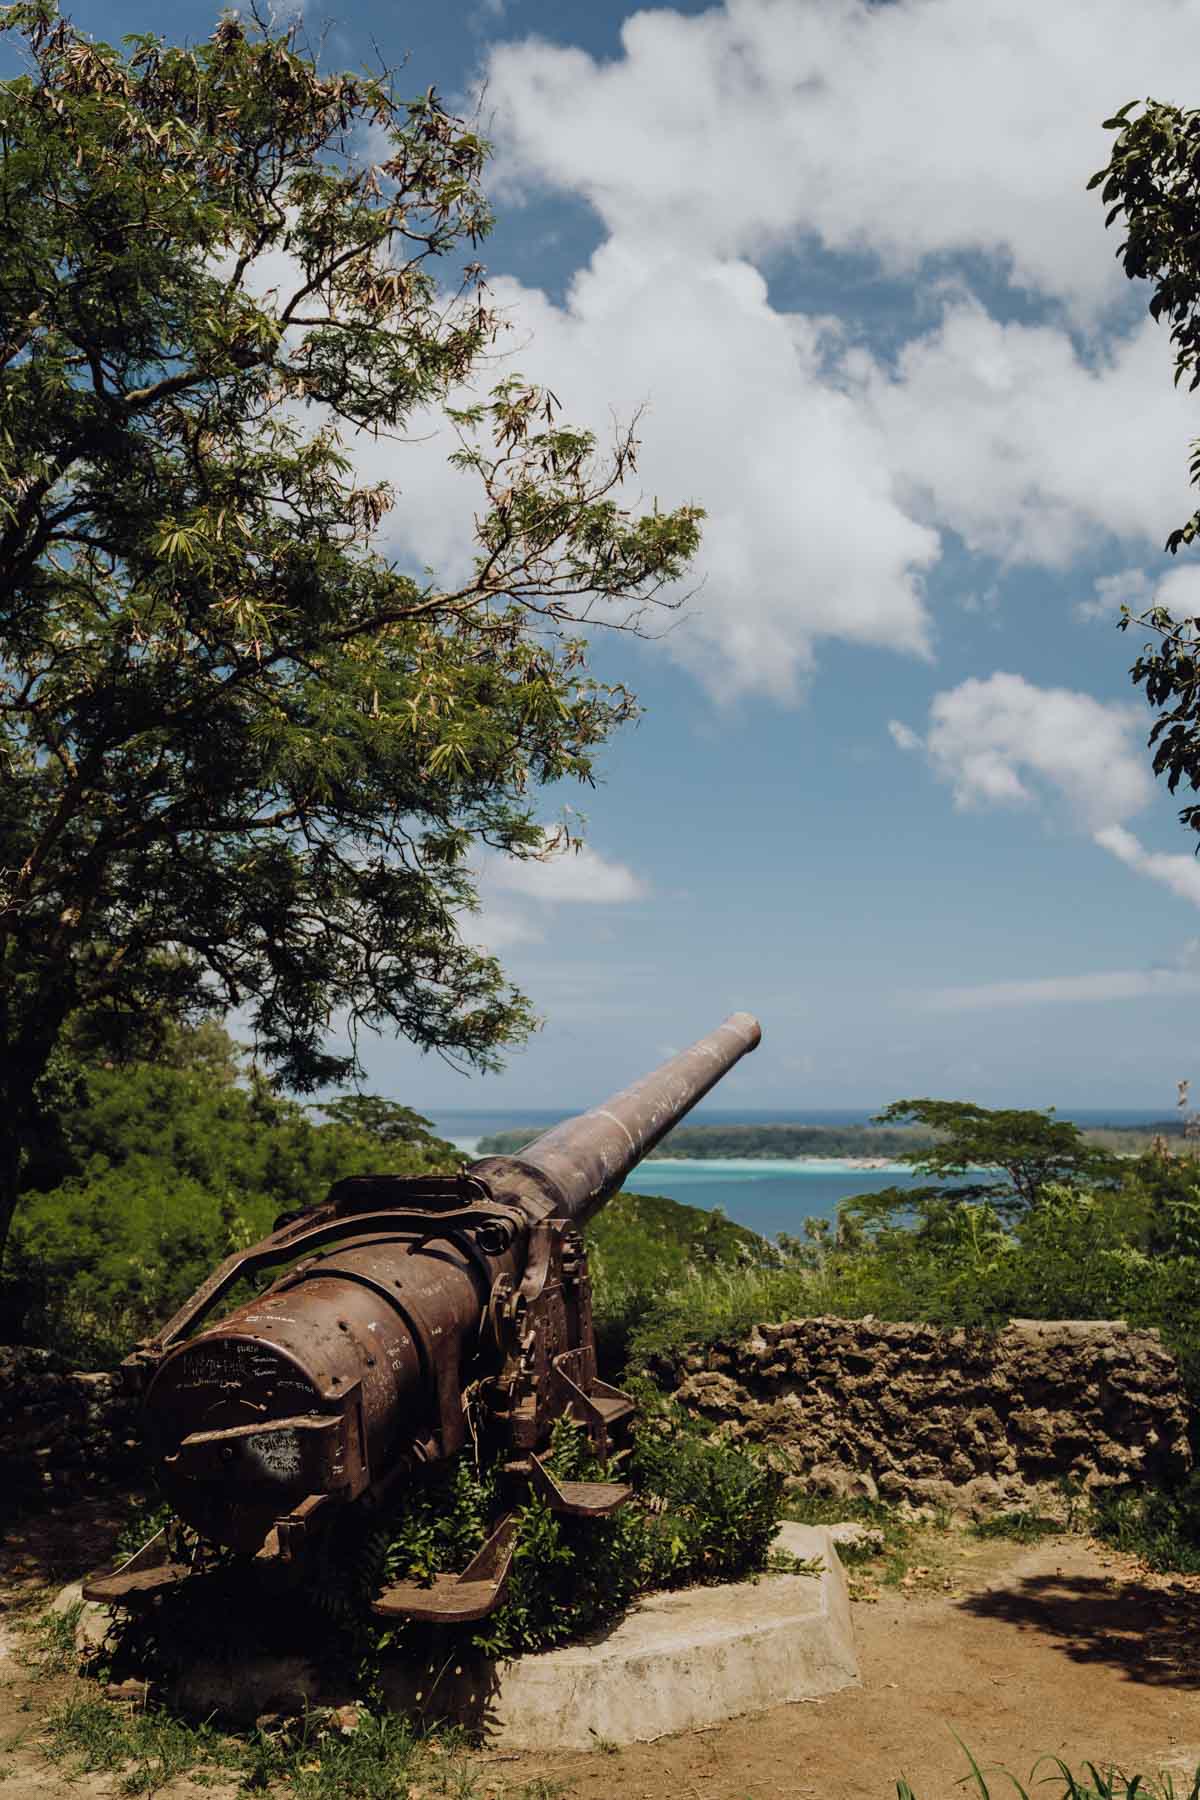 Old canons in Bora Bora